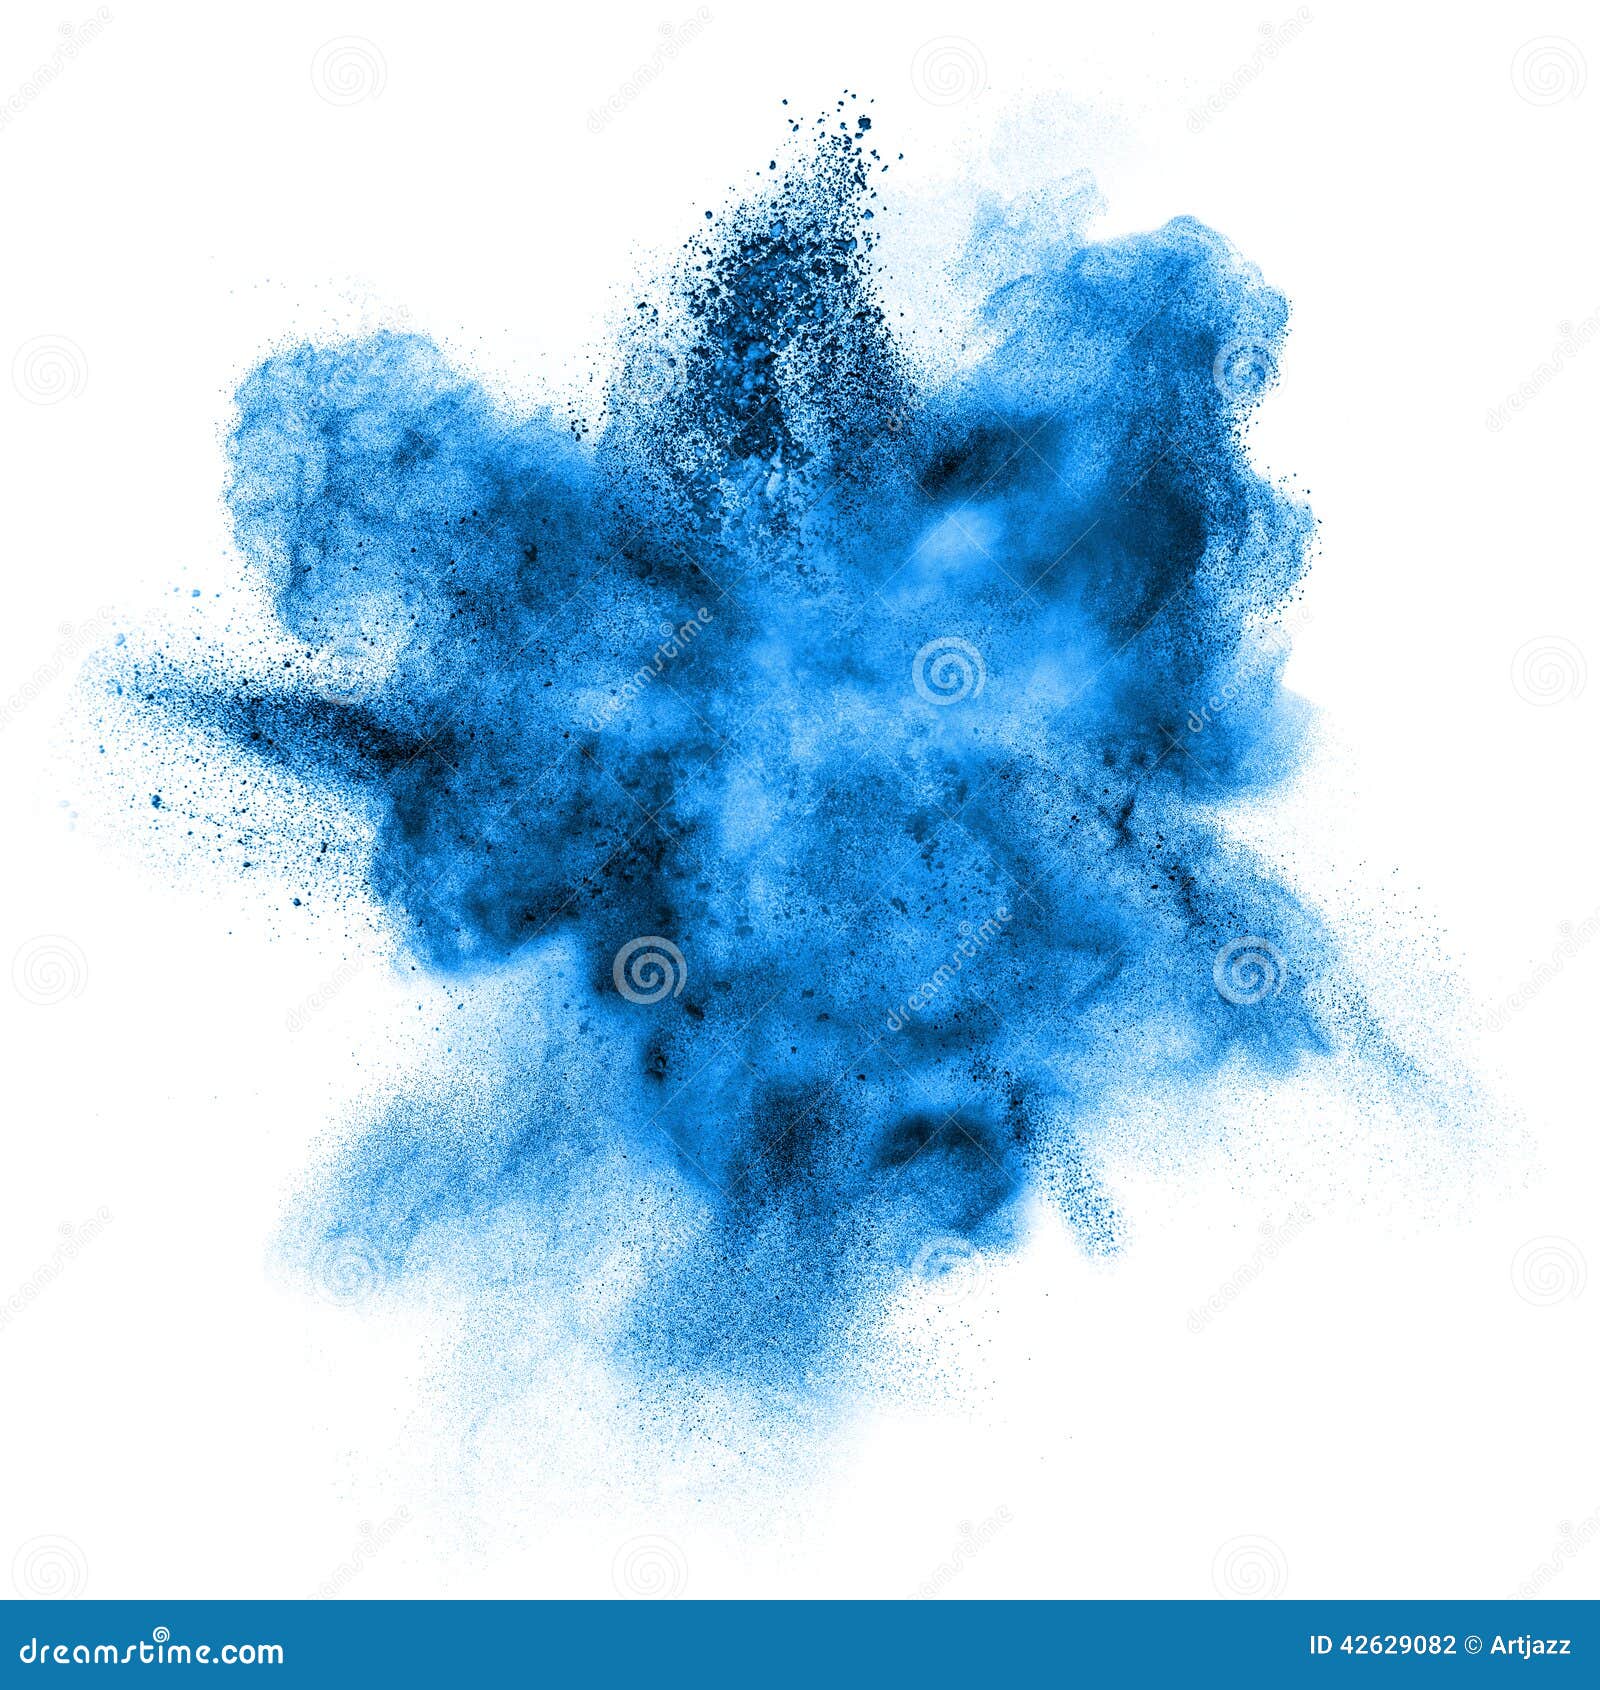 blue powder explosion  on white